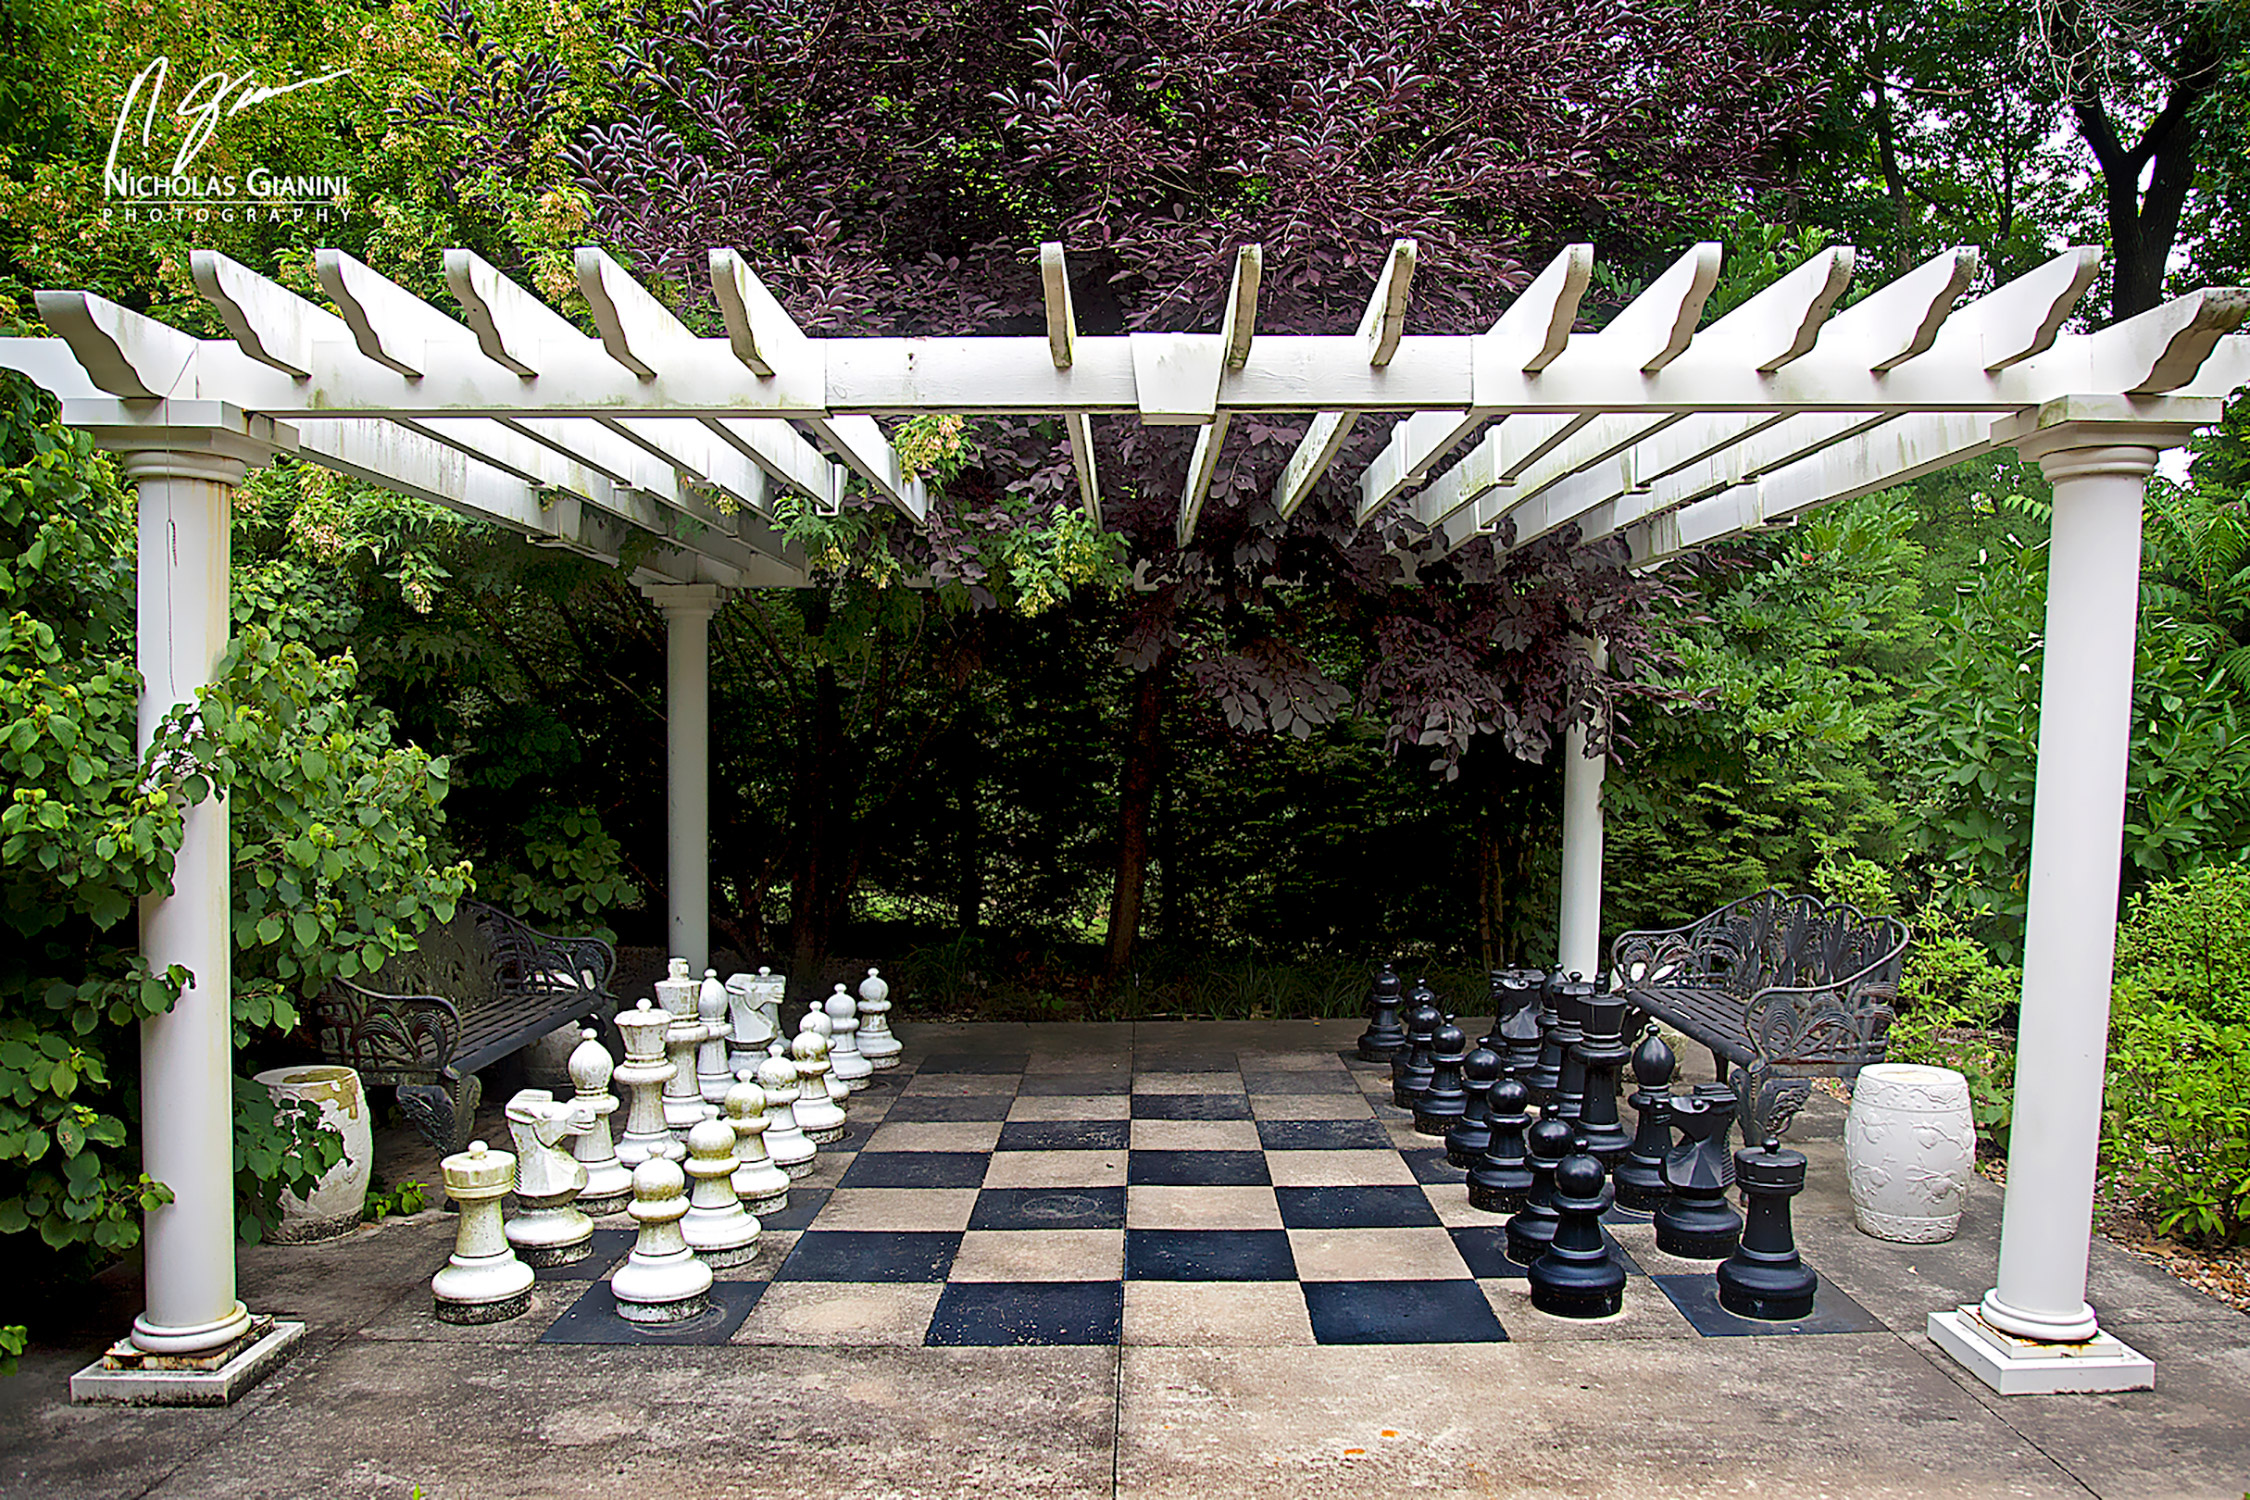 Avalon Hall at Overlook Farm giant chess board